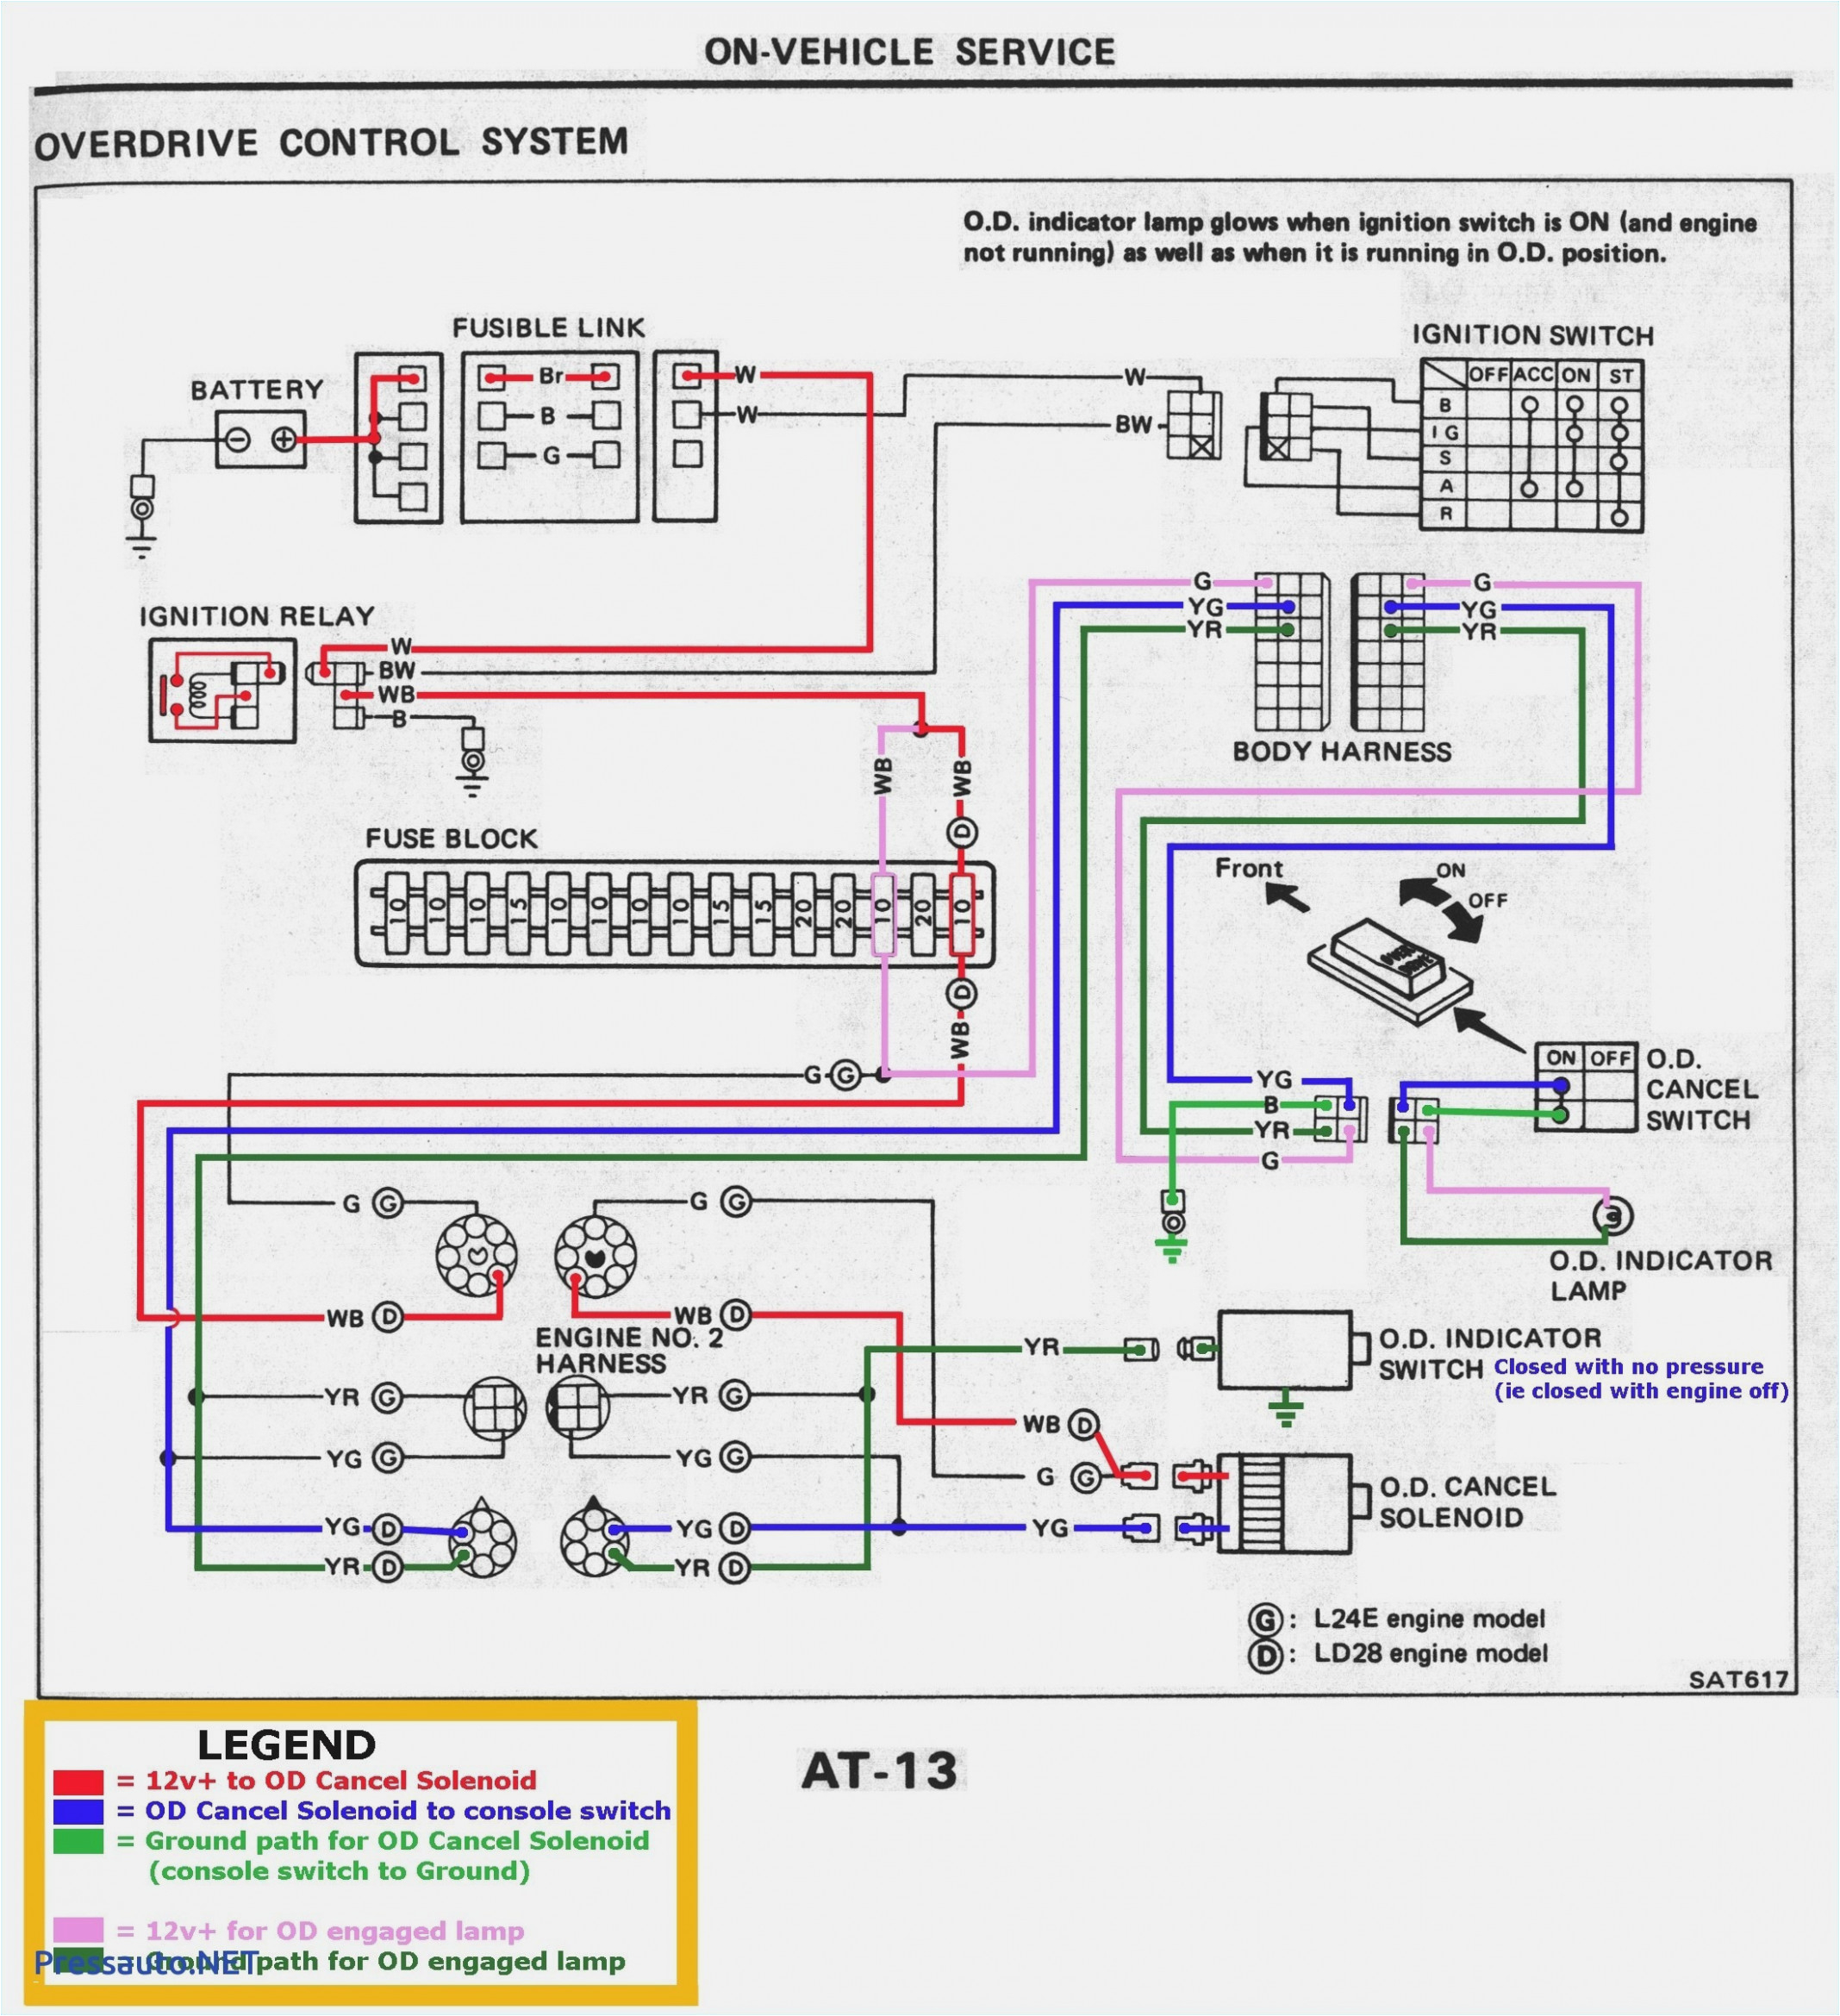 clark forklift ignition switch wiring diagram collection wiring clark forklift ignition switch wiring diagram jpg